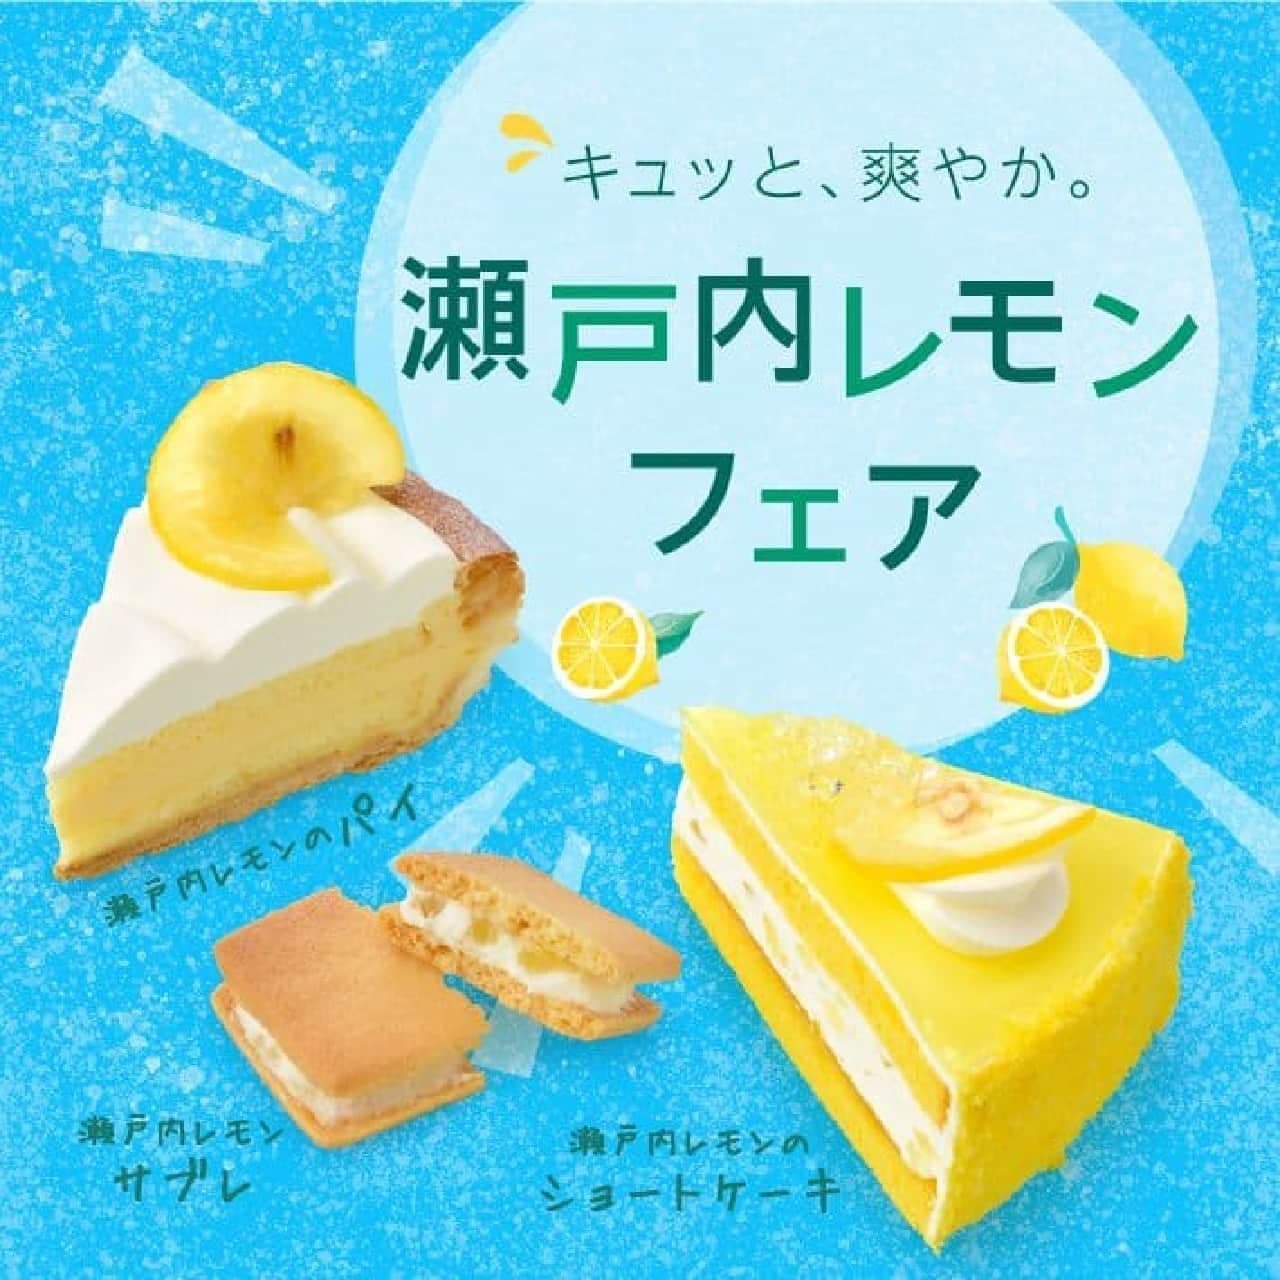 Ginza Cosy Corner Setouchi Lemon Fair